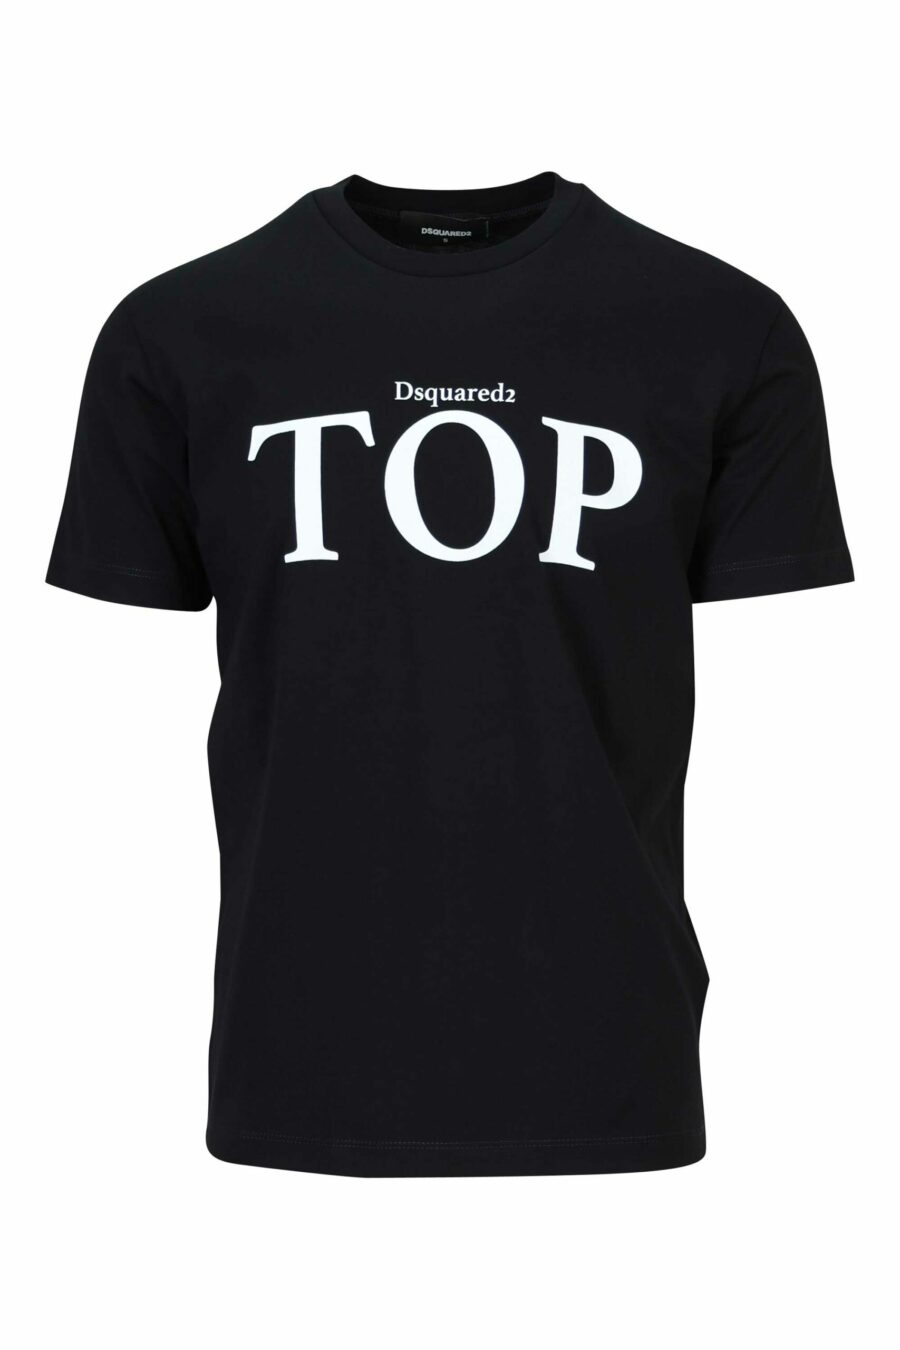 Camiseta negra con maxilogo "top" - 8054148570927 scaled